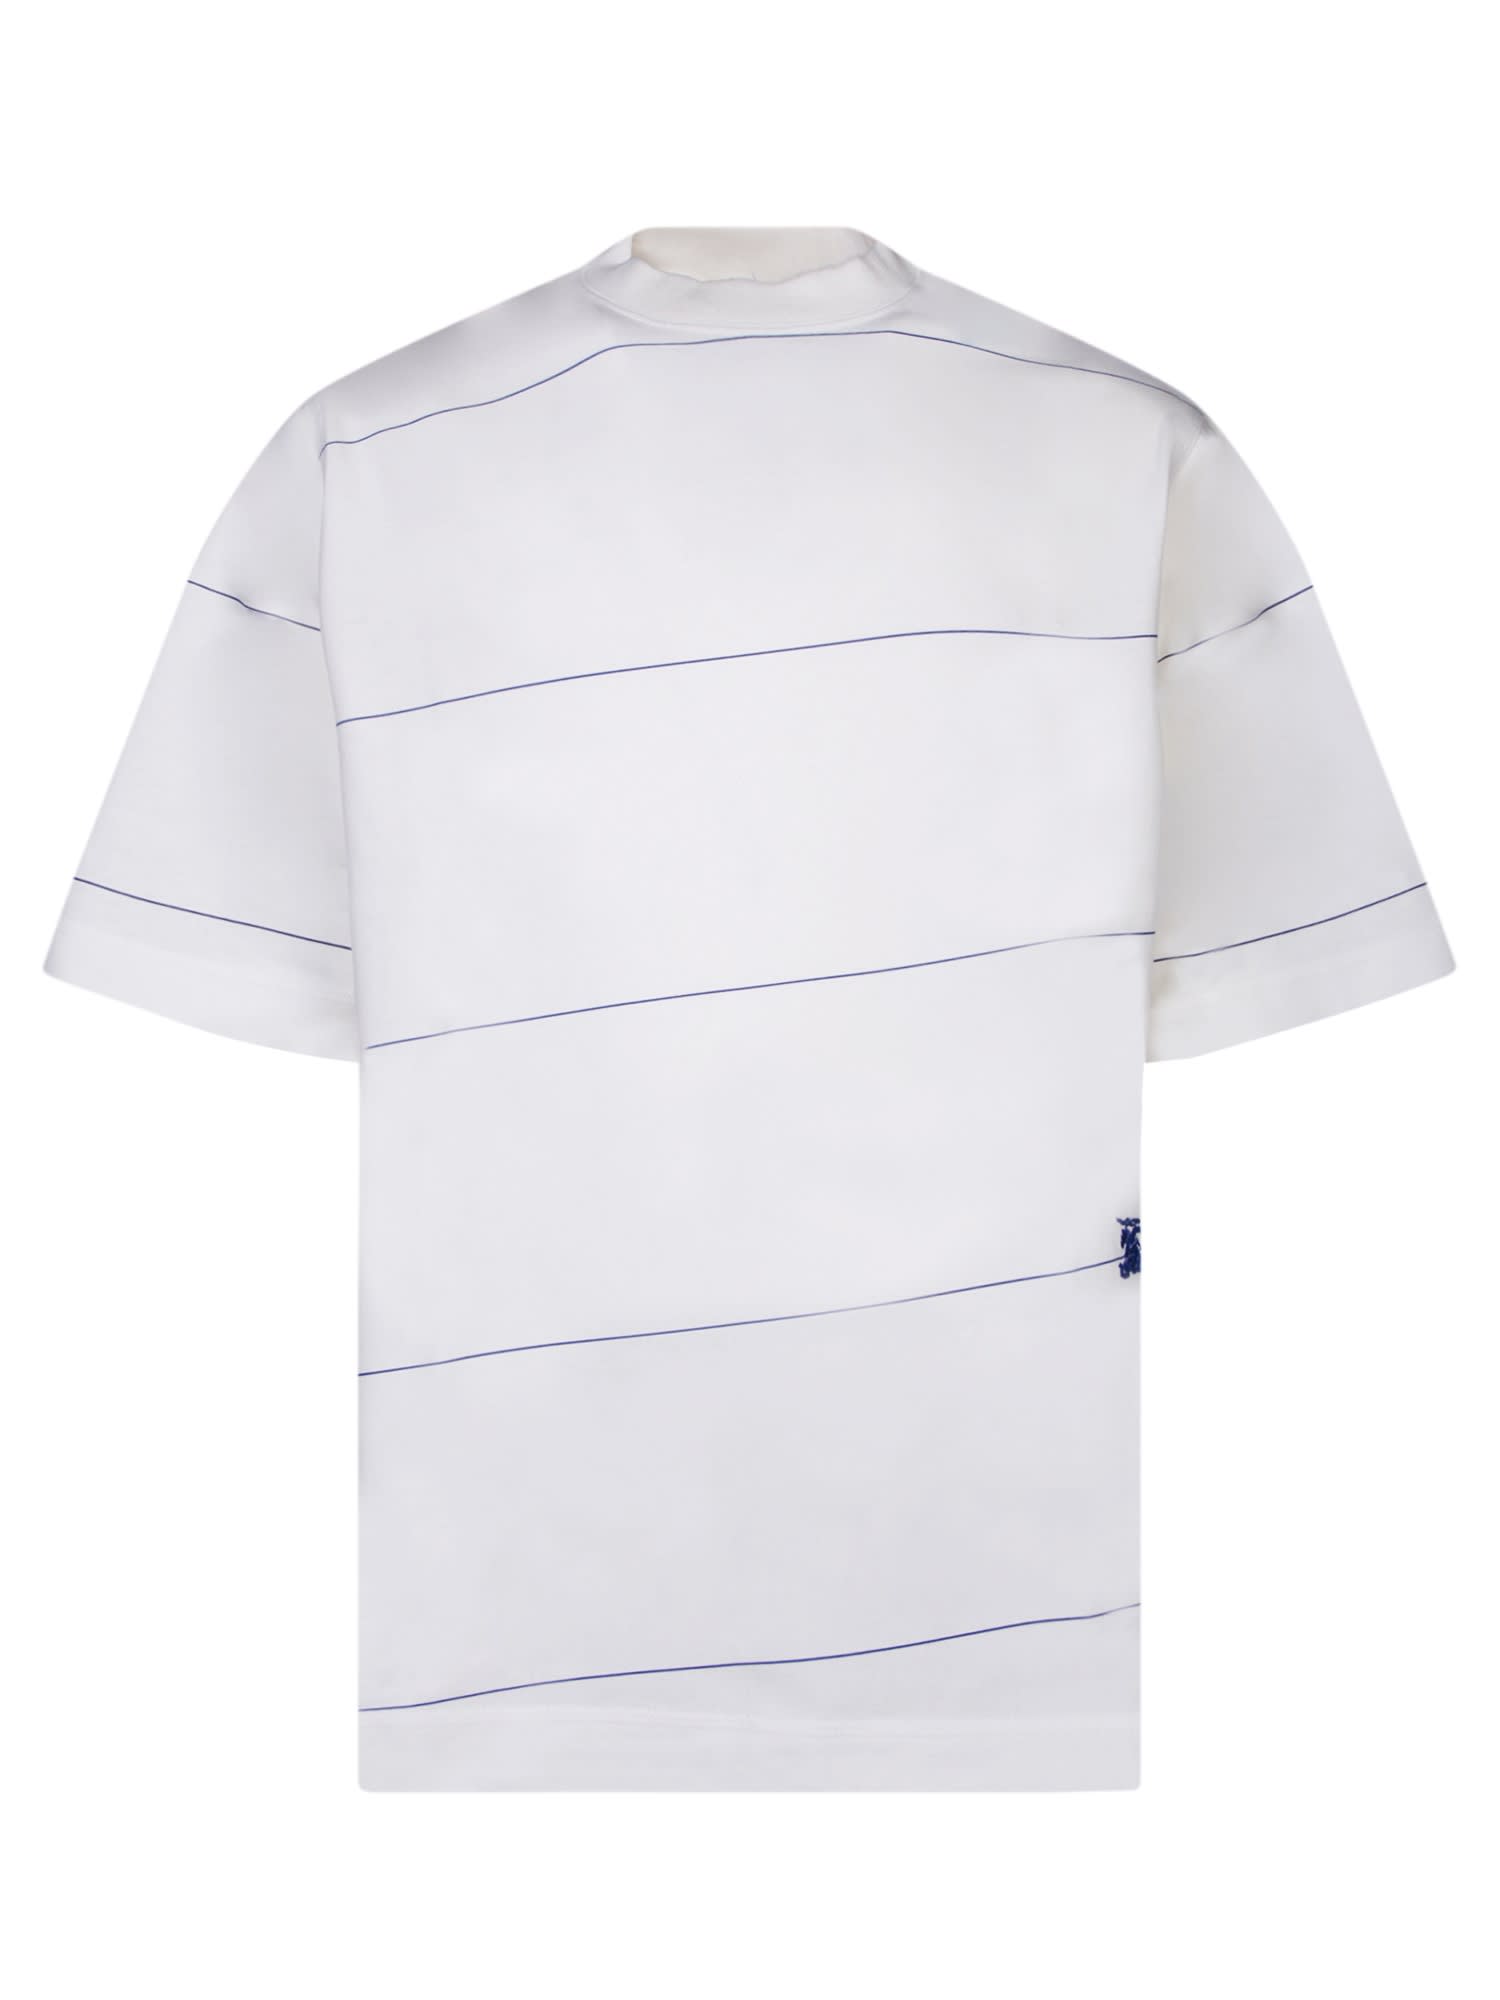 Striped White T-shirt